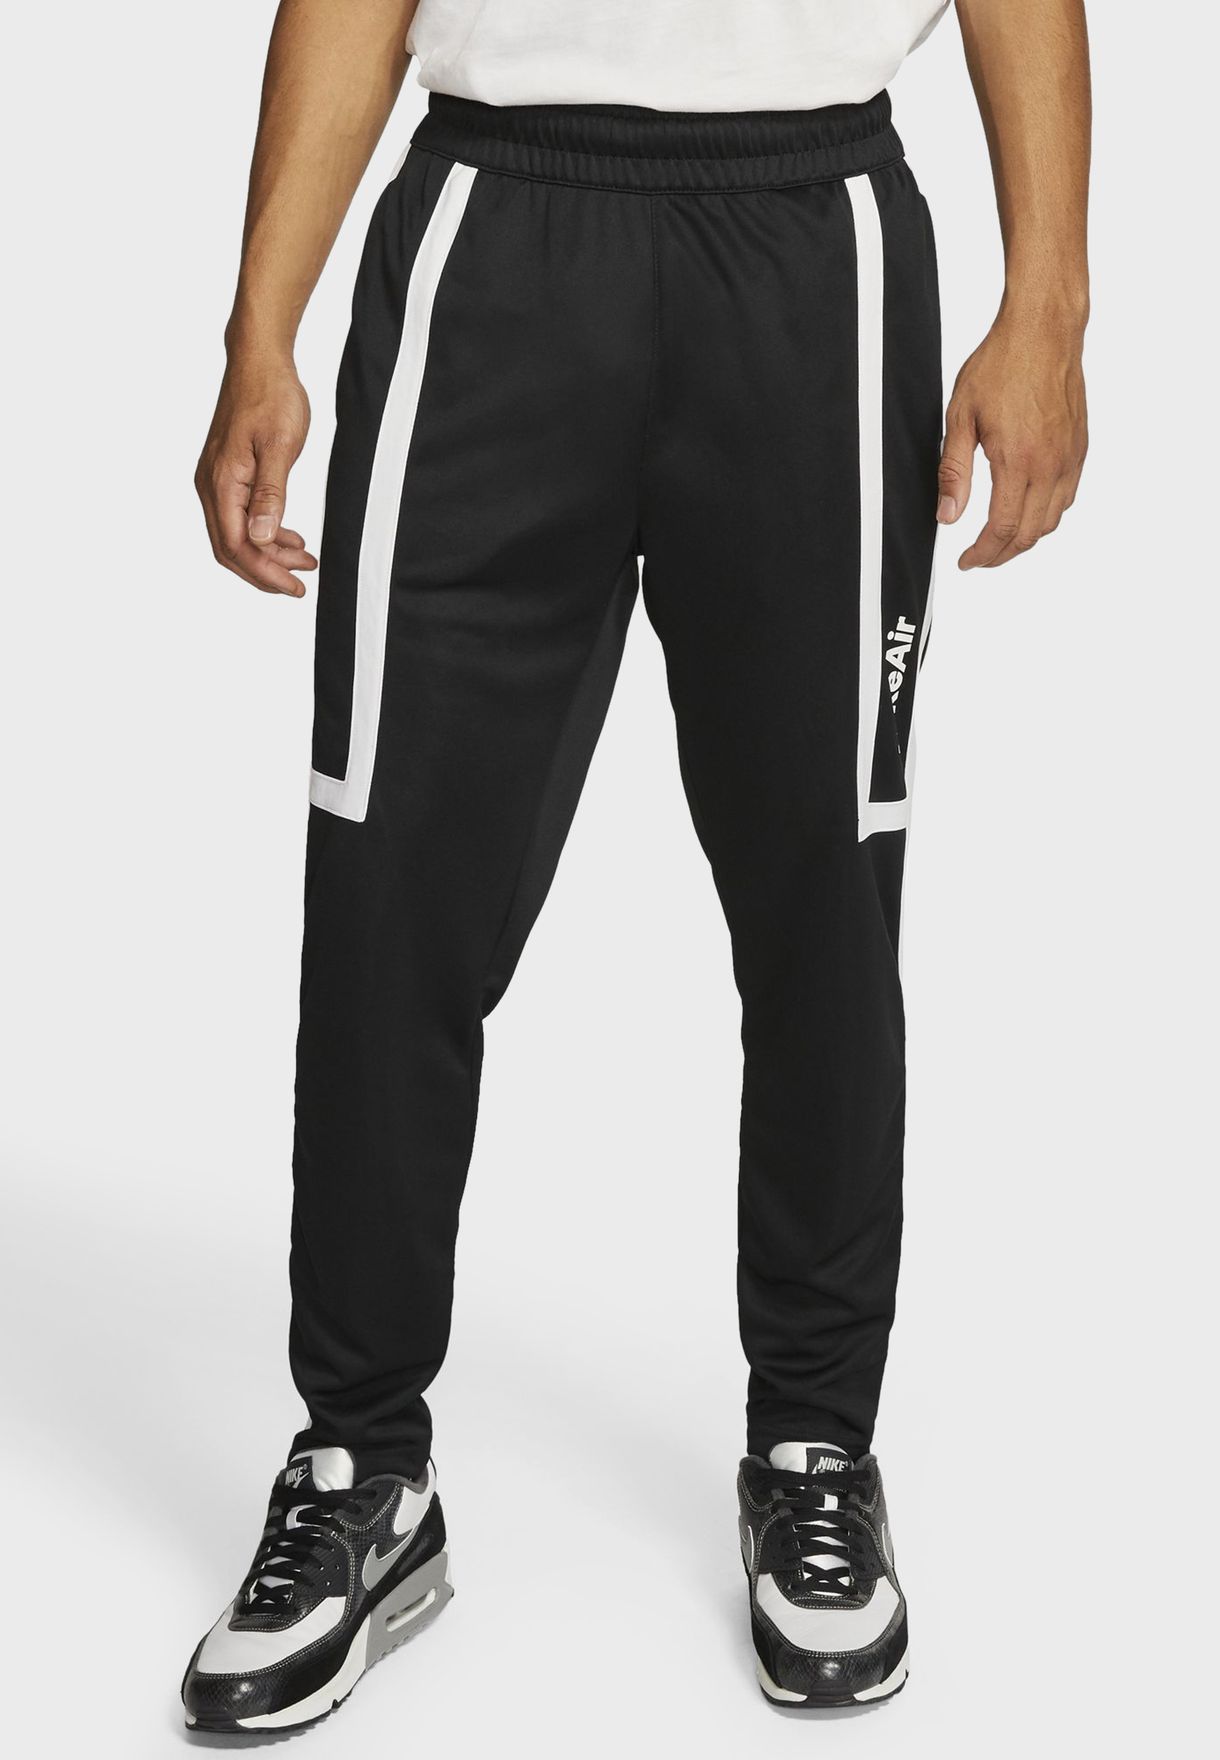 Buy Nike black NSW Air Sweatpants for 